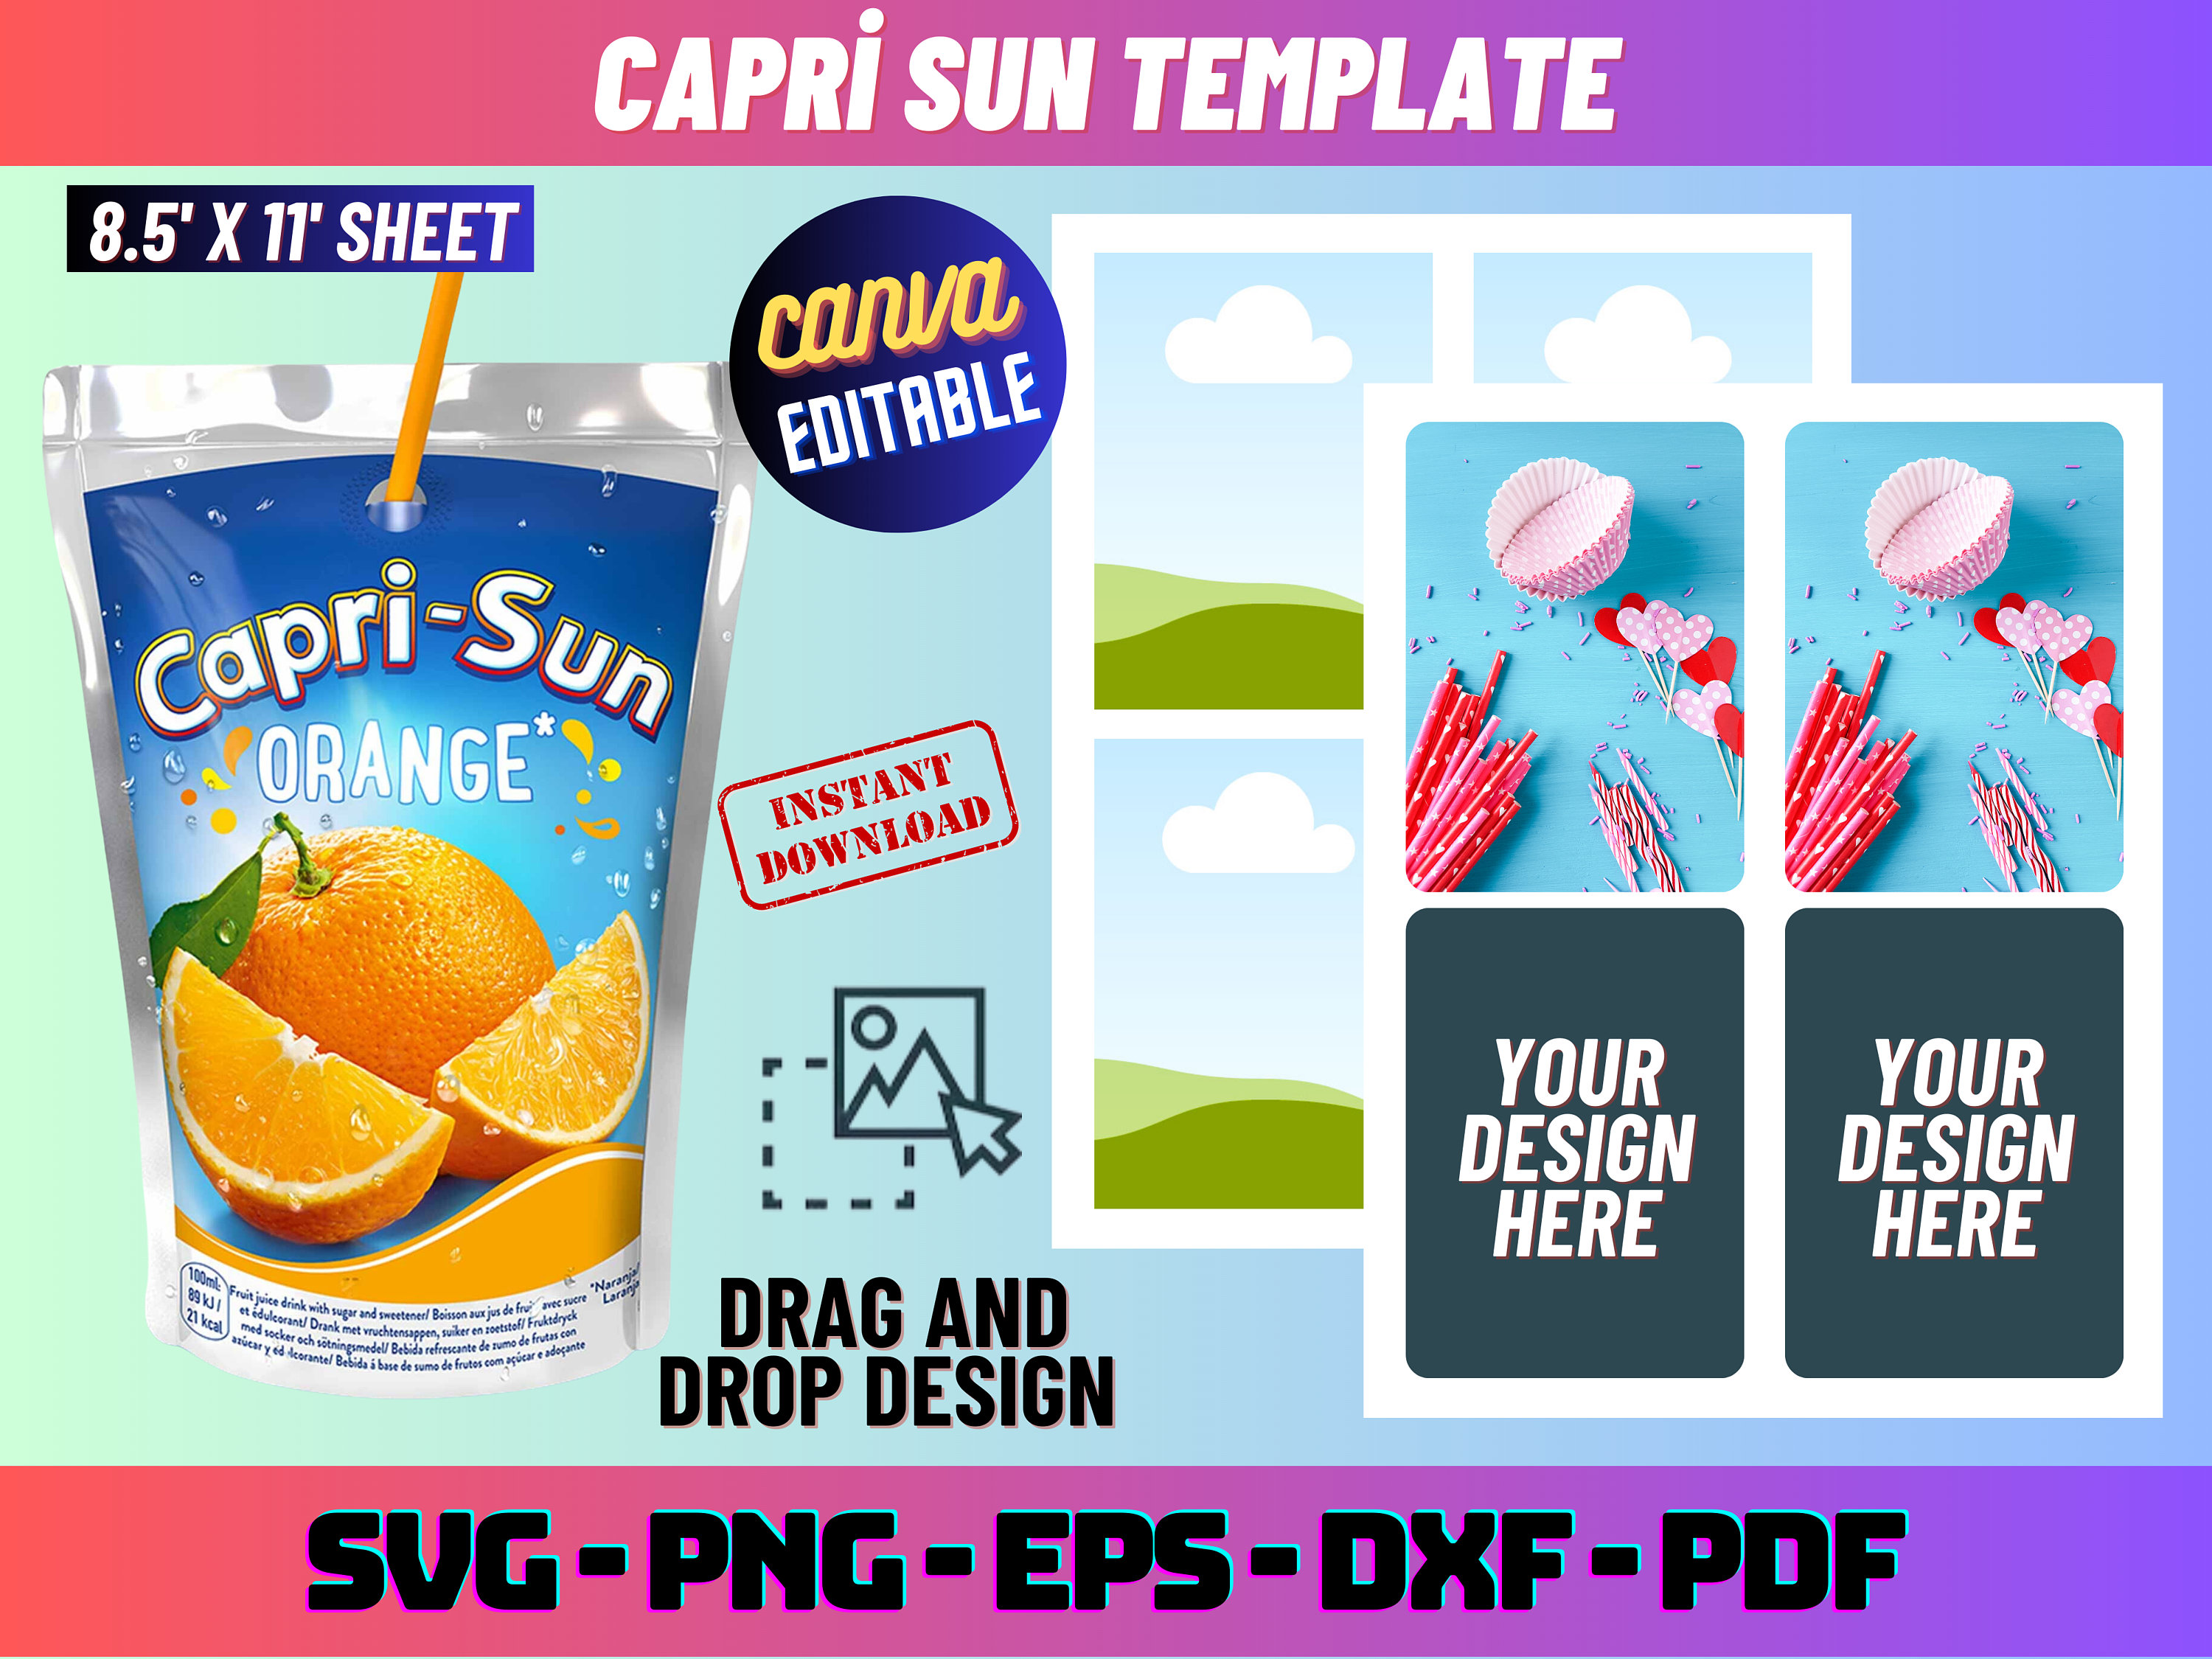 FNAF Capri Sun Labels Designed by me for a #fivenightsatfreddys Birt